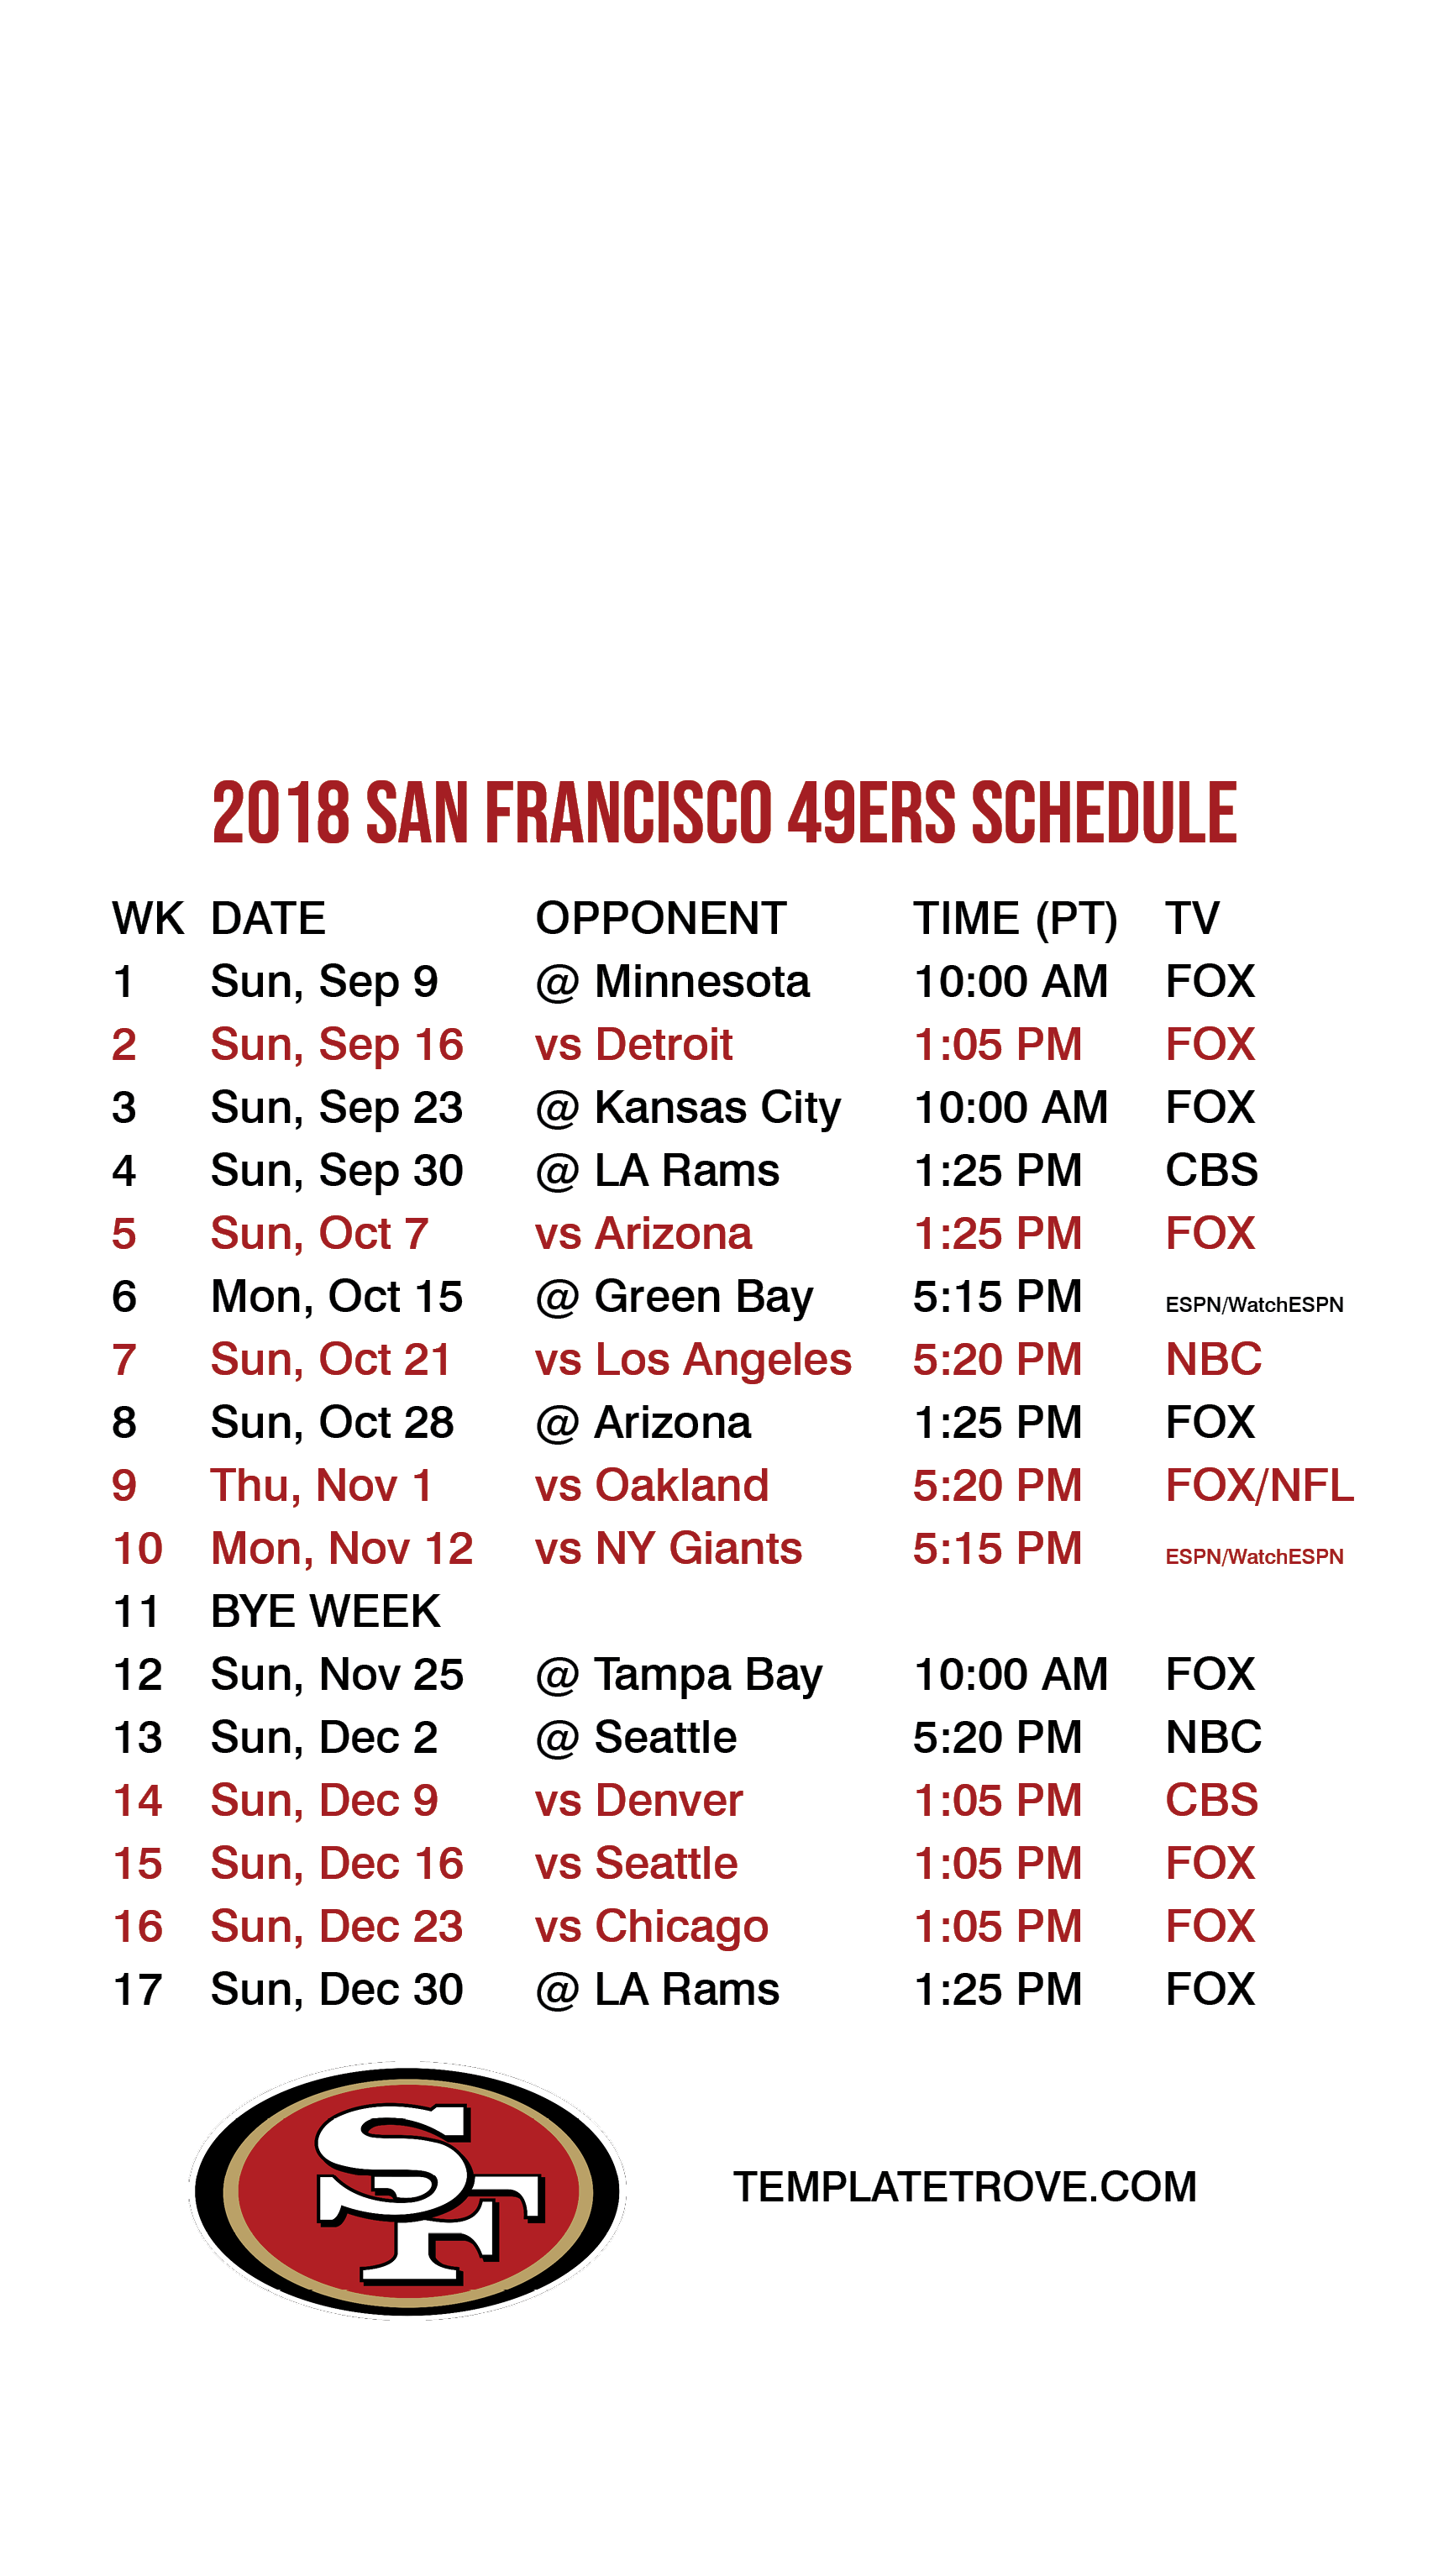 2018 2019 San Francisco 49ers Lock Screen Schedule For IPhone 6 7 8 Plus